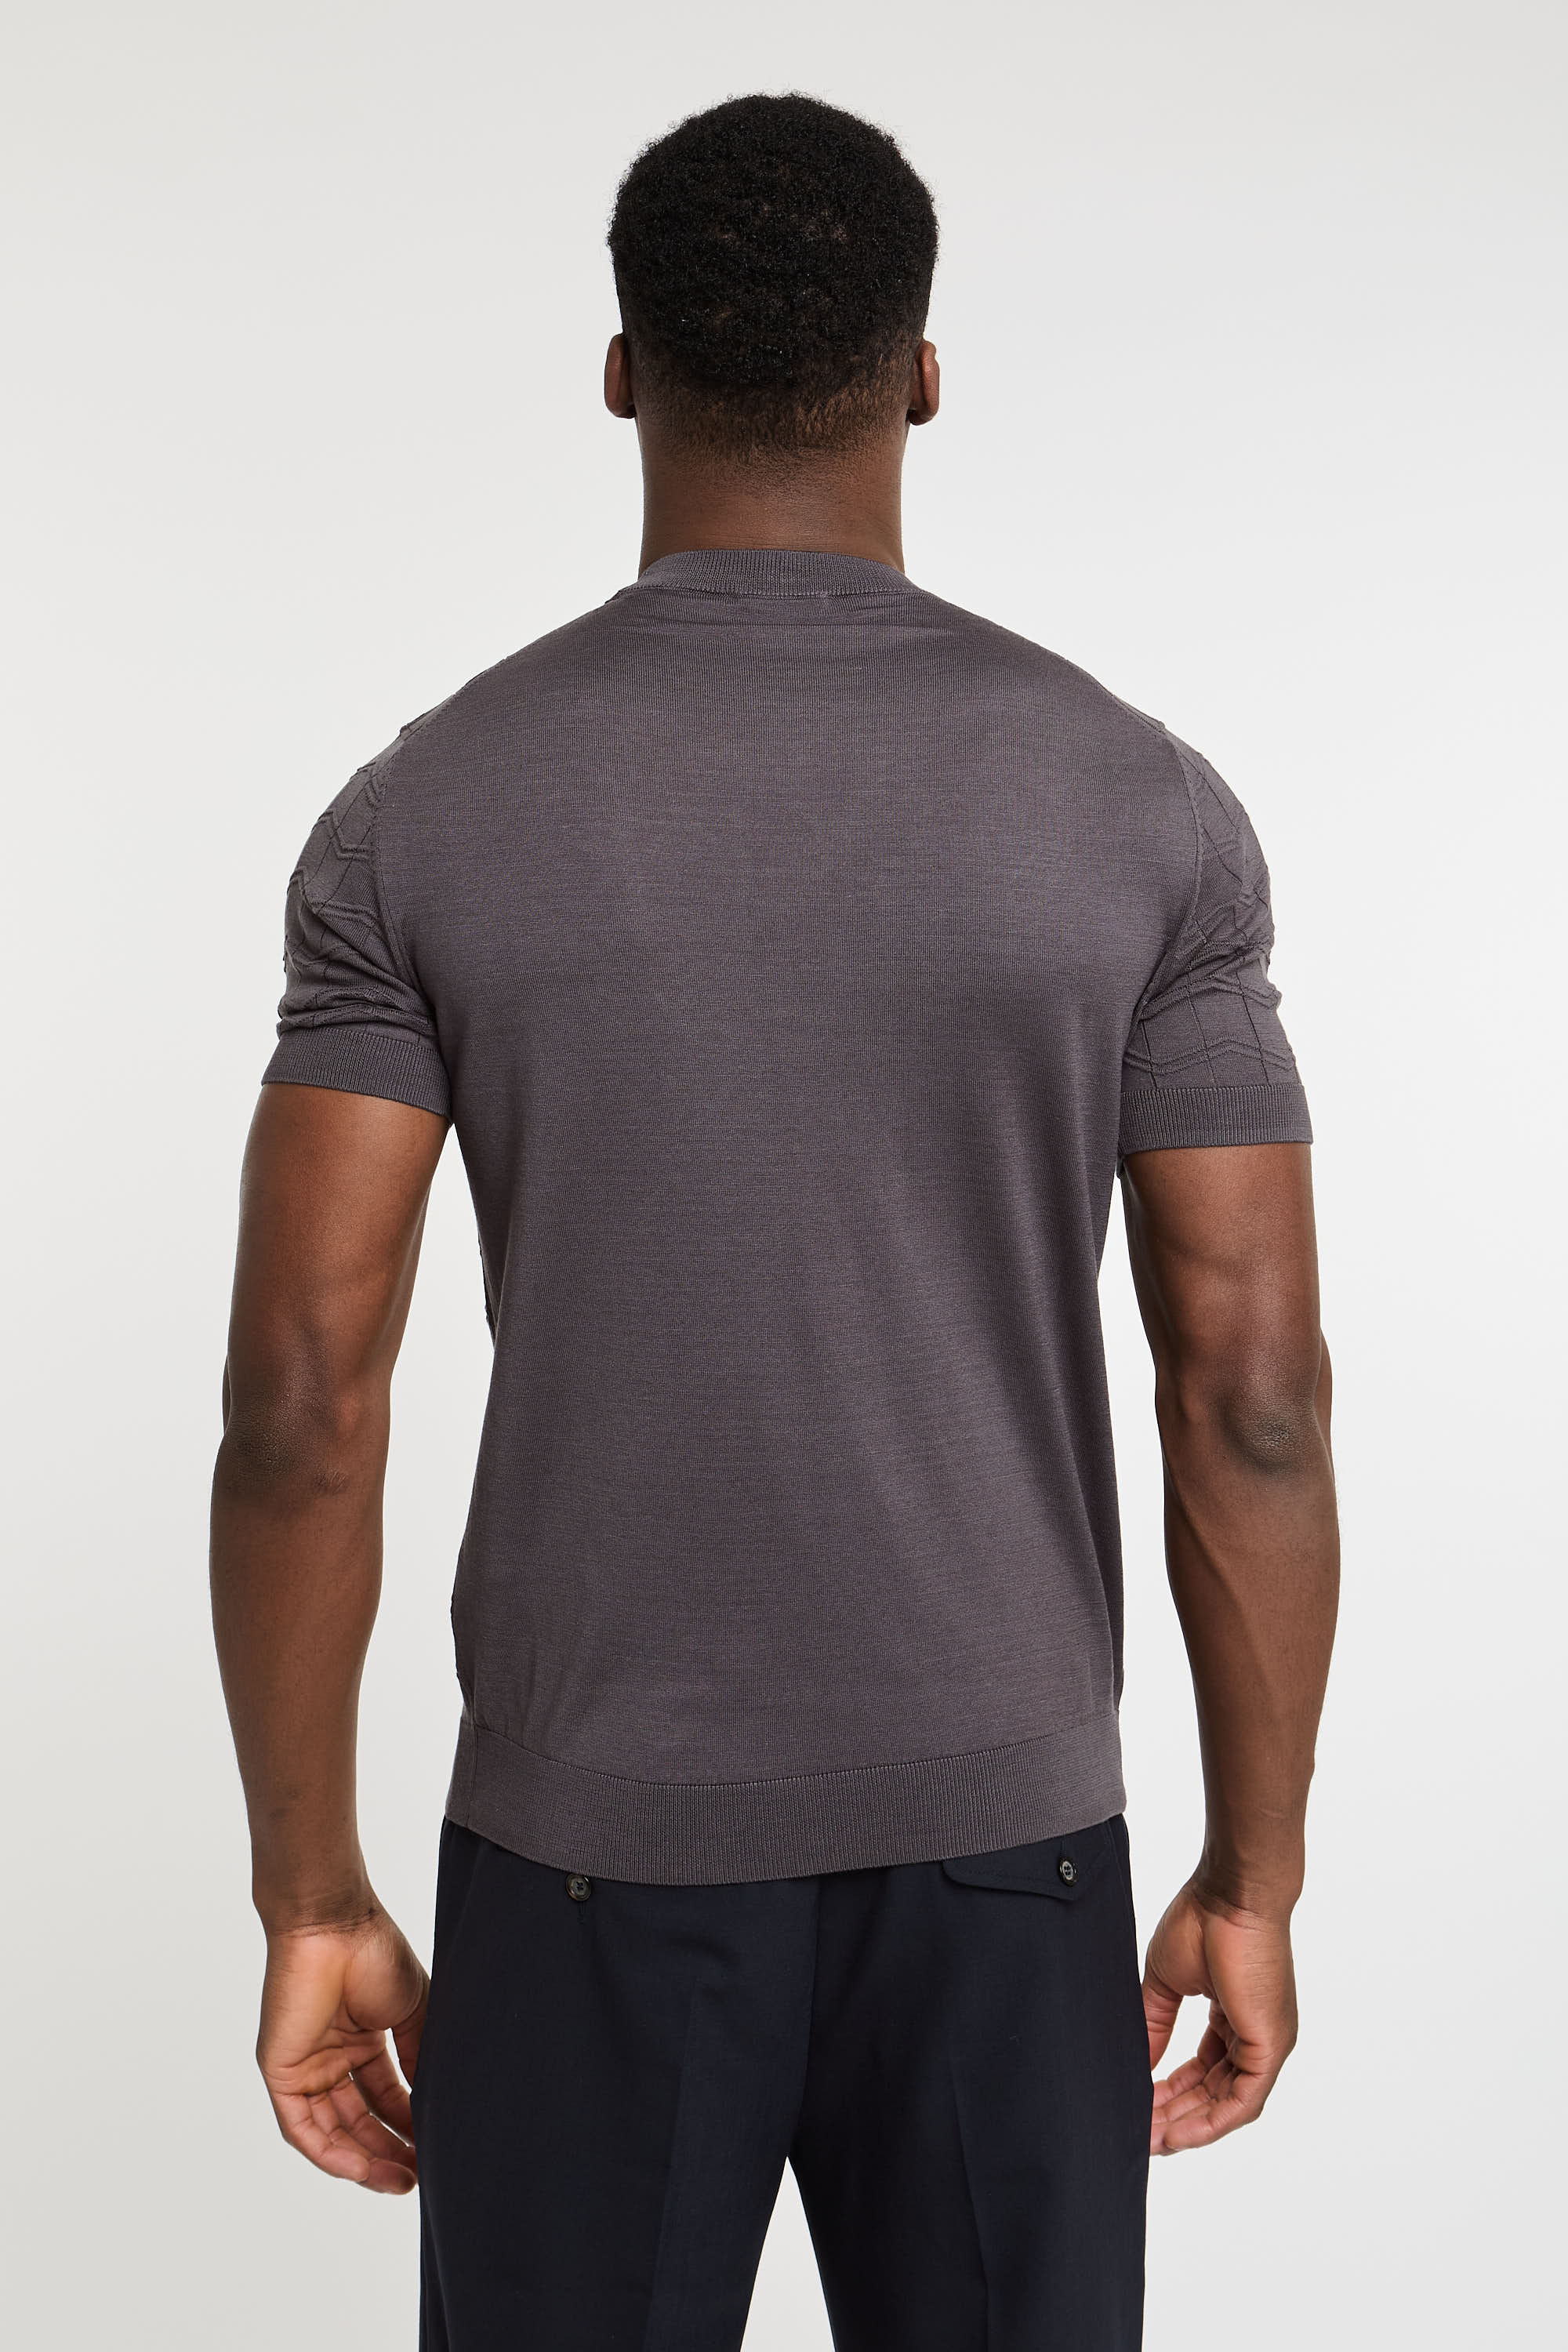 Paolo Pecora Silk/Cotton T-Shirt in Grey-3